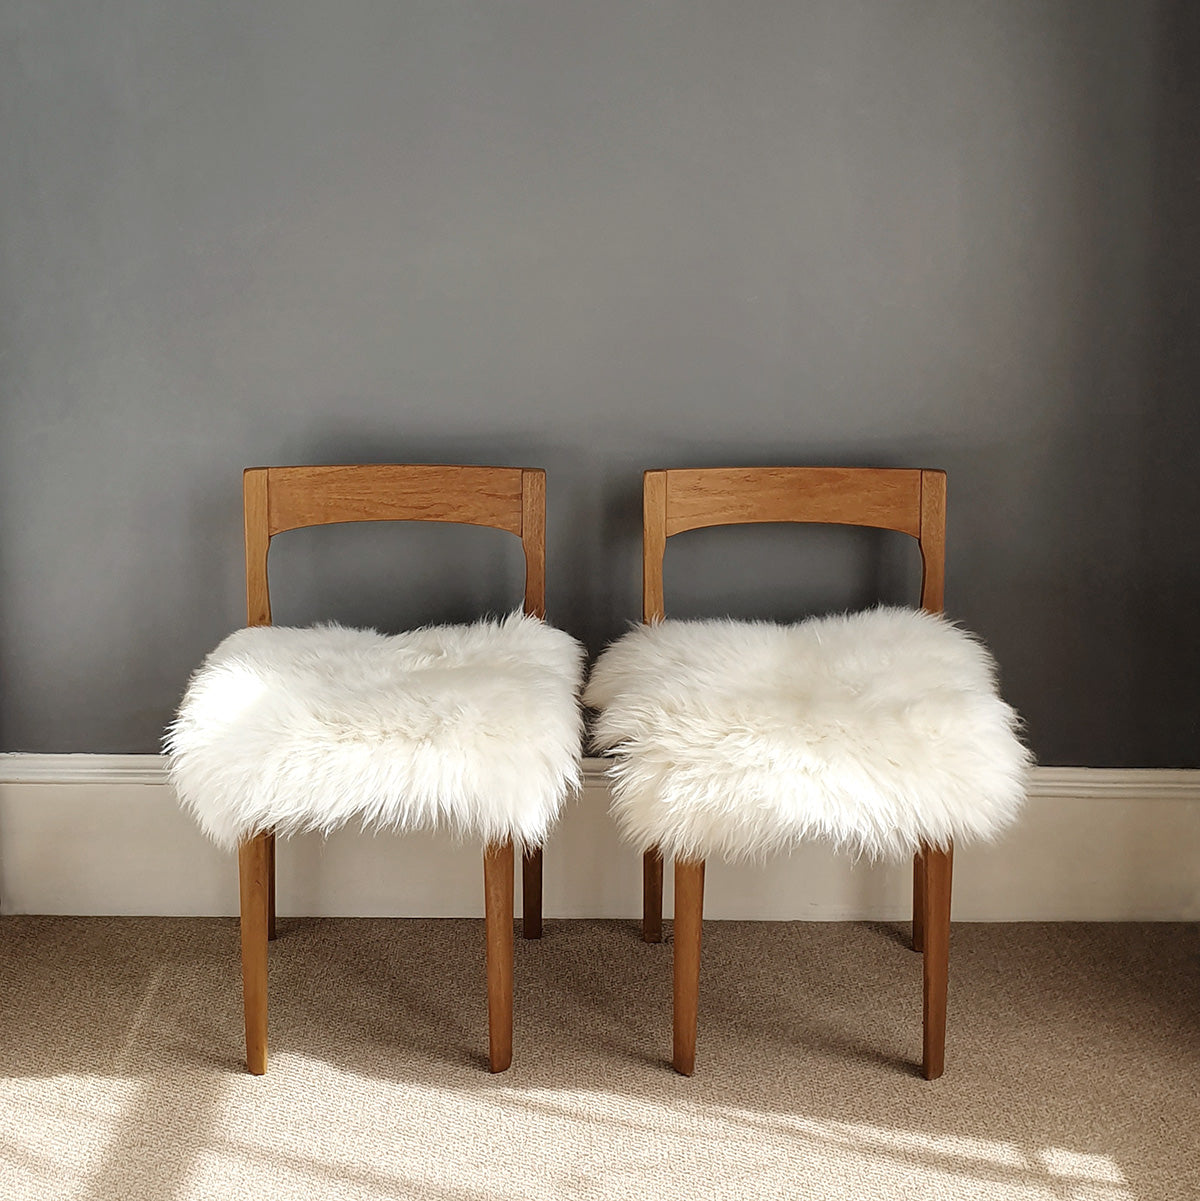 Natural White/Ivory British Sheepskin Seat Pad